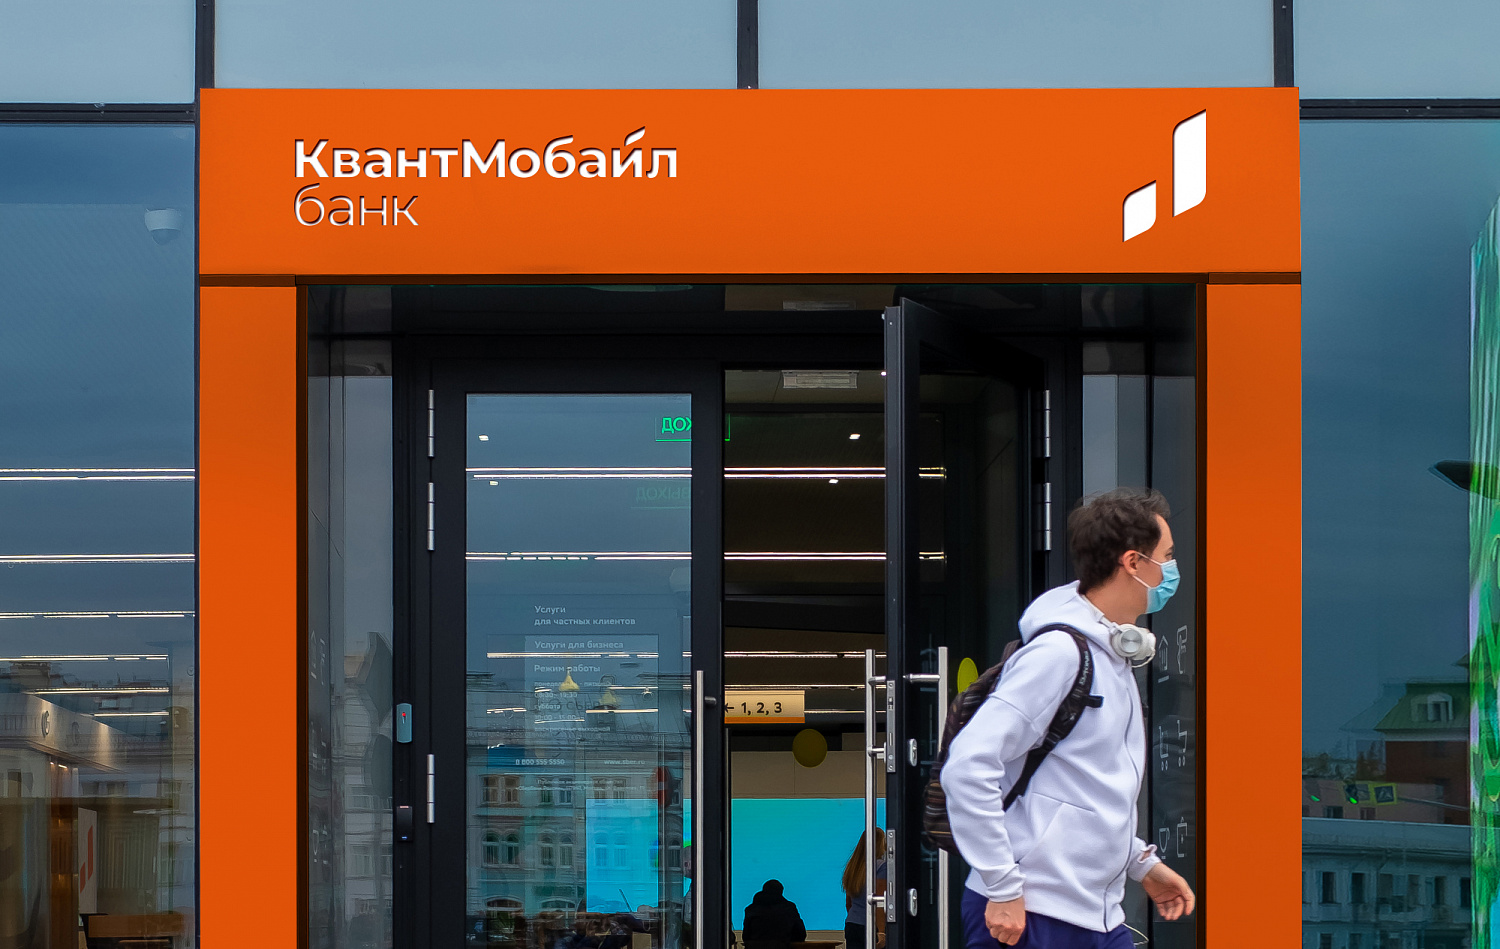 Kvant Mobile Bank - Портфолио Depot